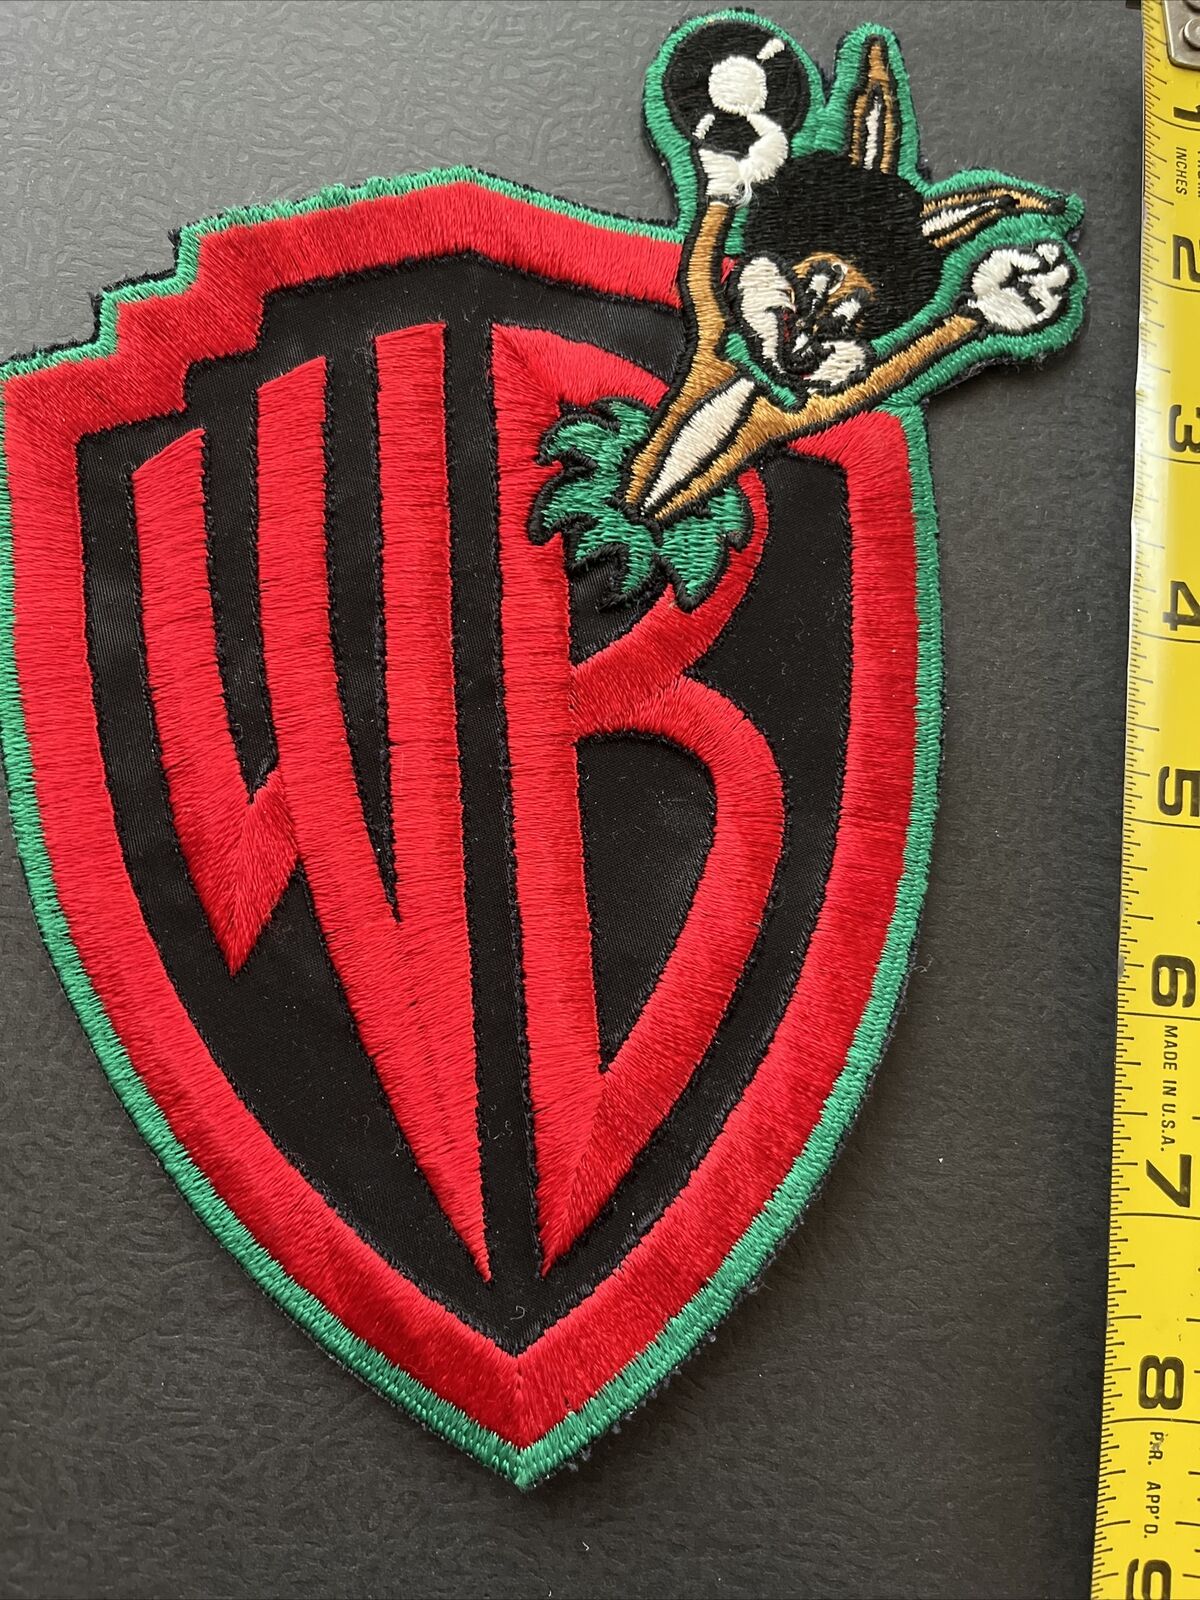 REDUCED RARE Warner Bros BLACK Bugs Bunny Large Patch Vintage WB Shield